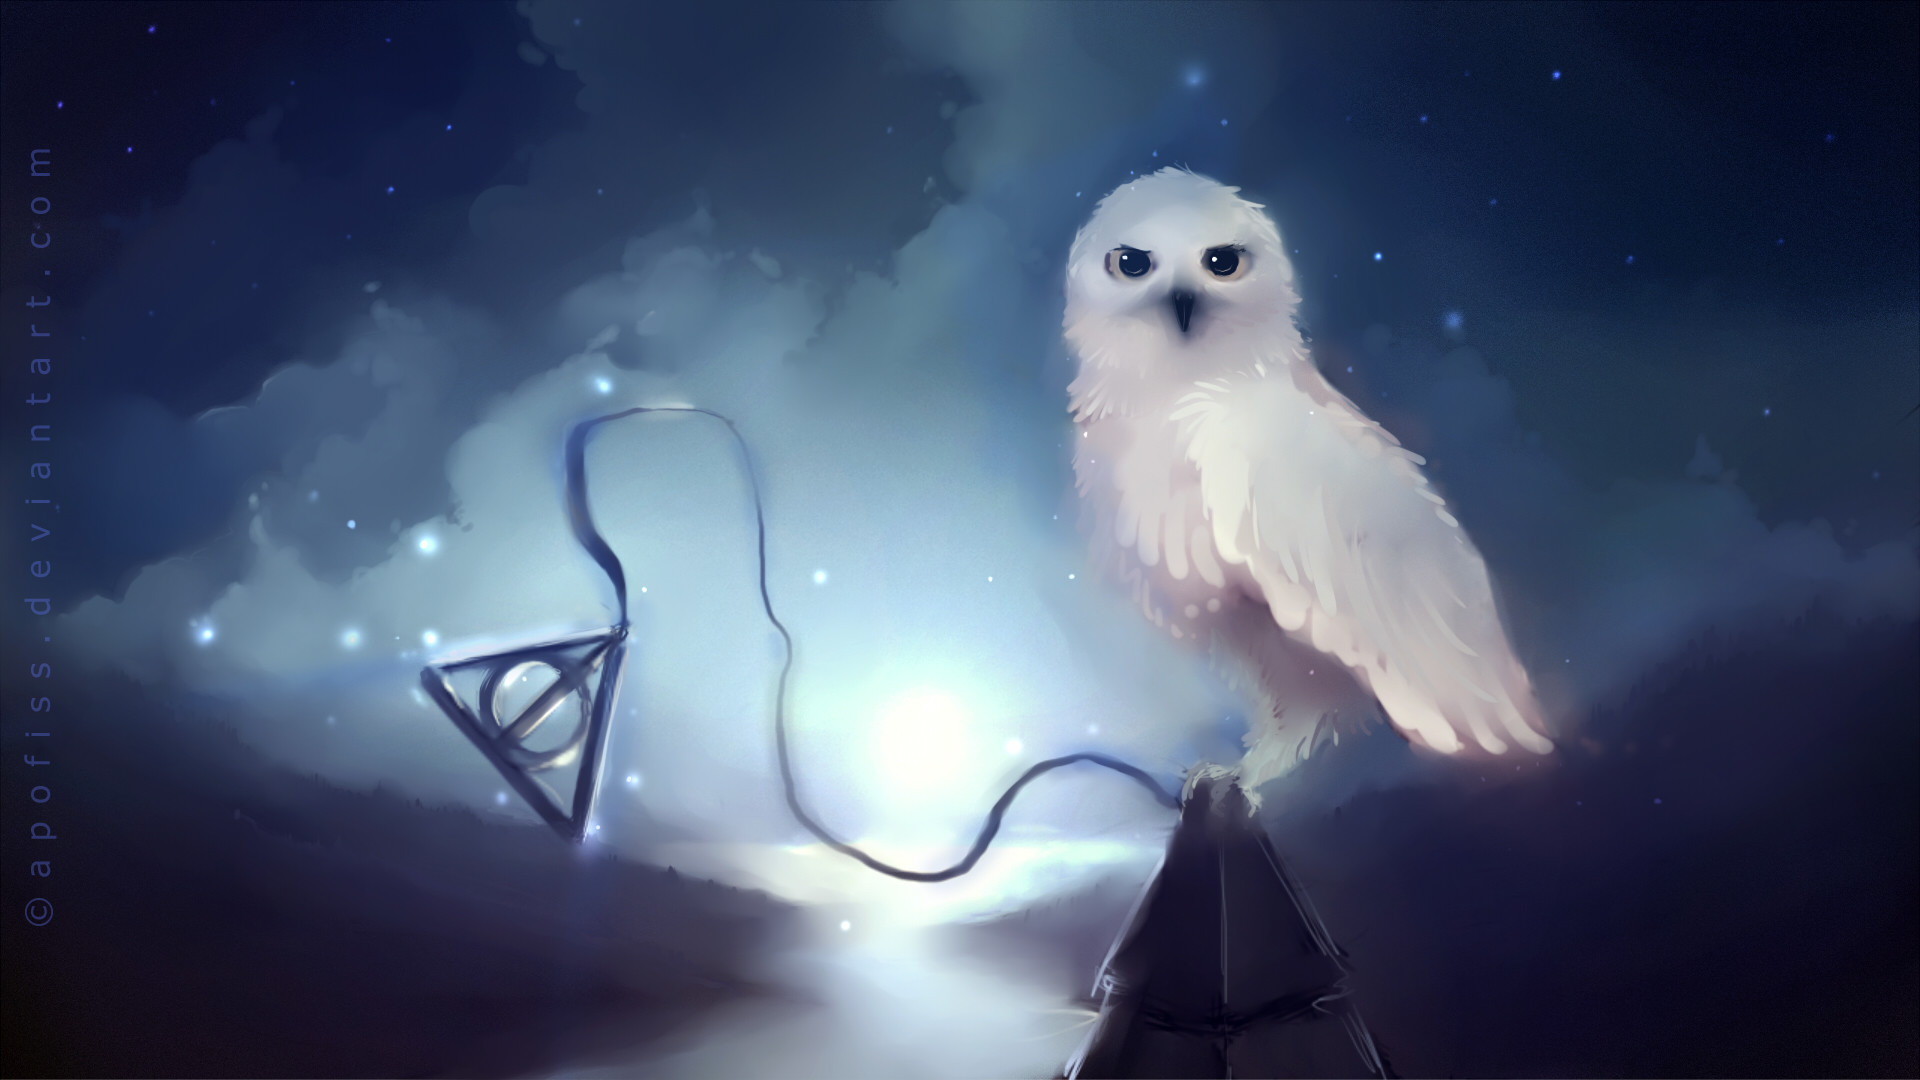 Hedwig download Hedwig image